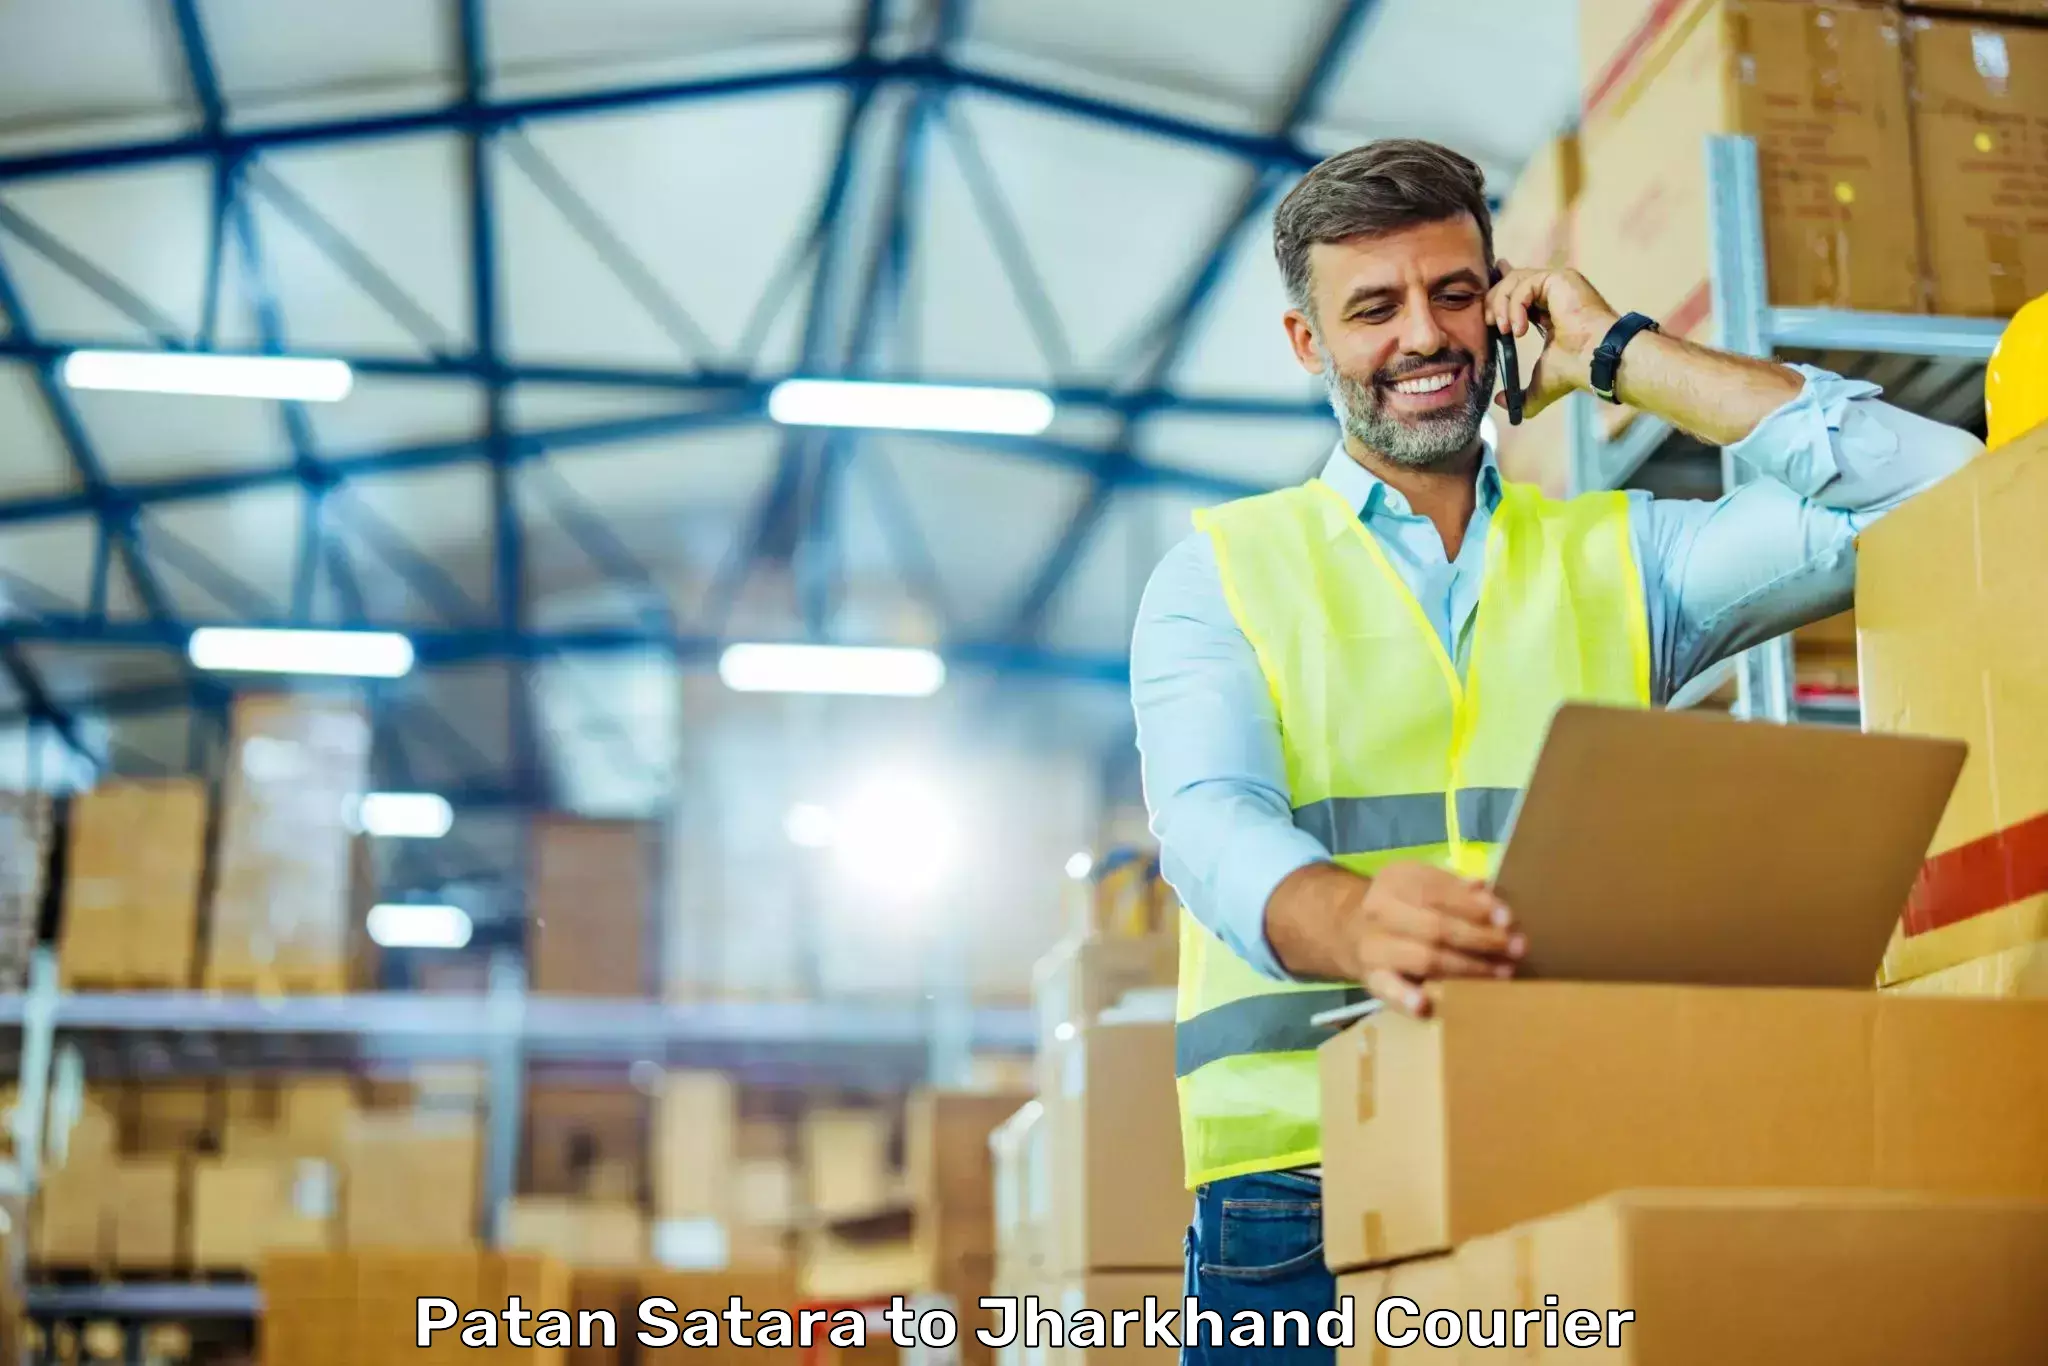 Global parcel delivery Patan Satara to Jamshedpur